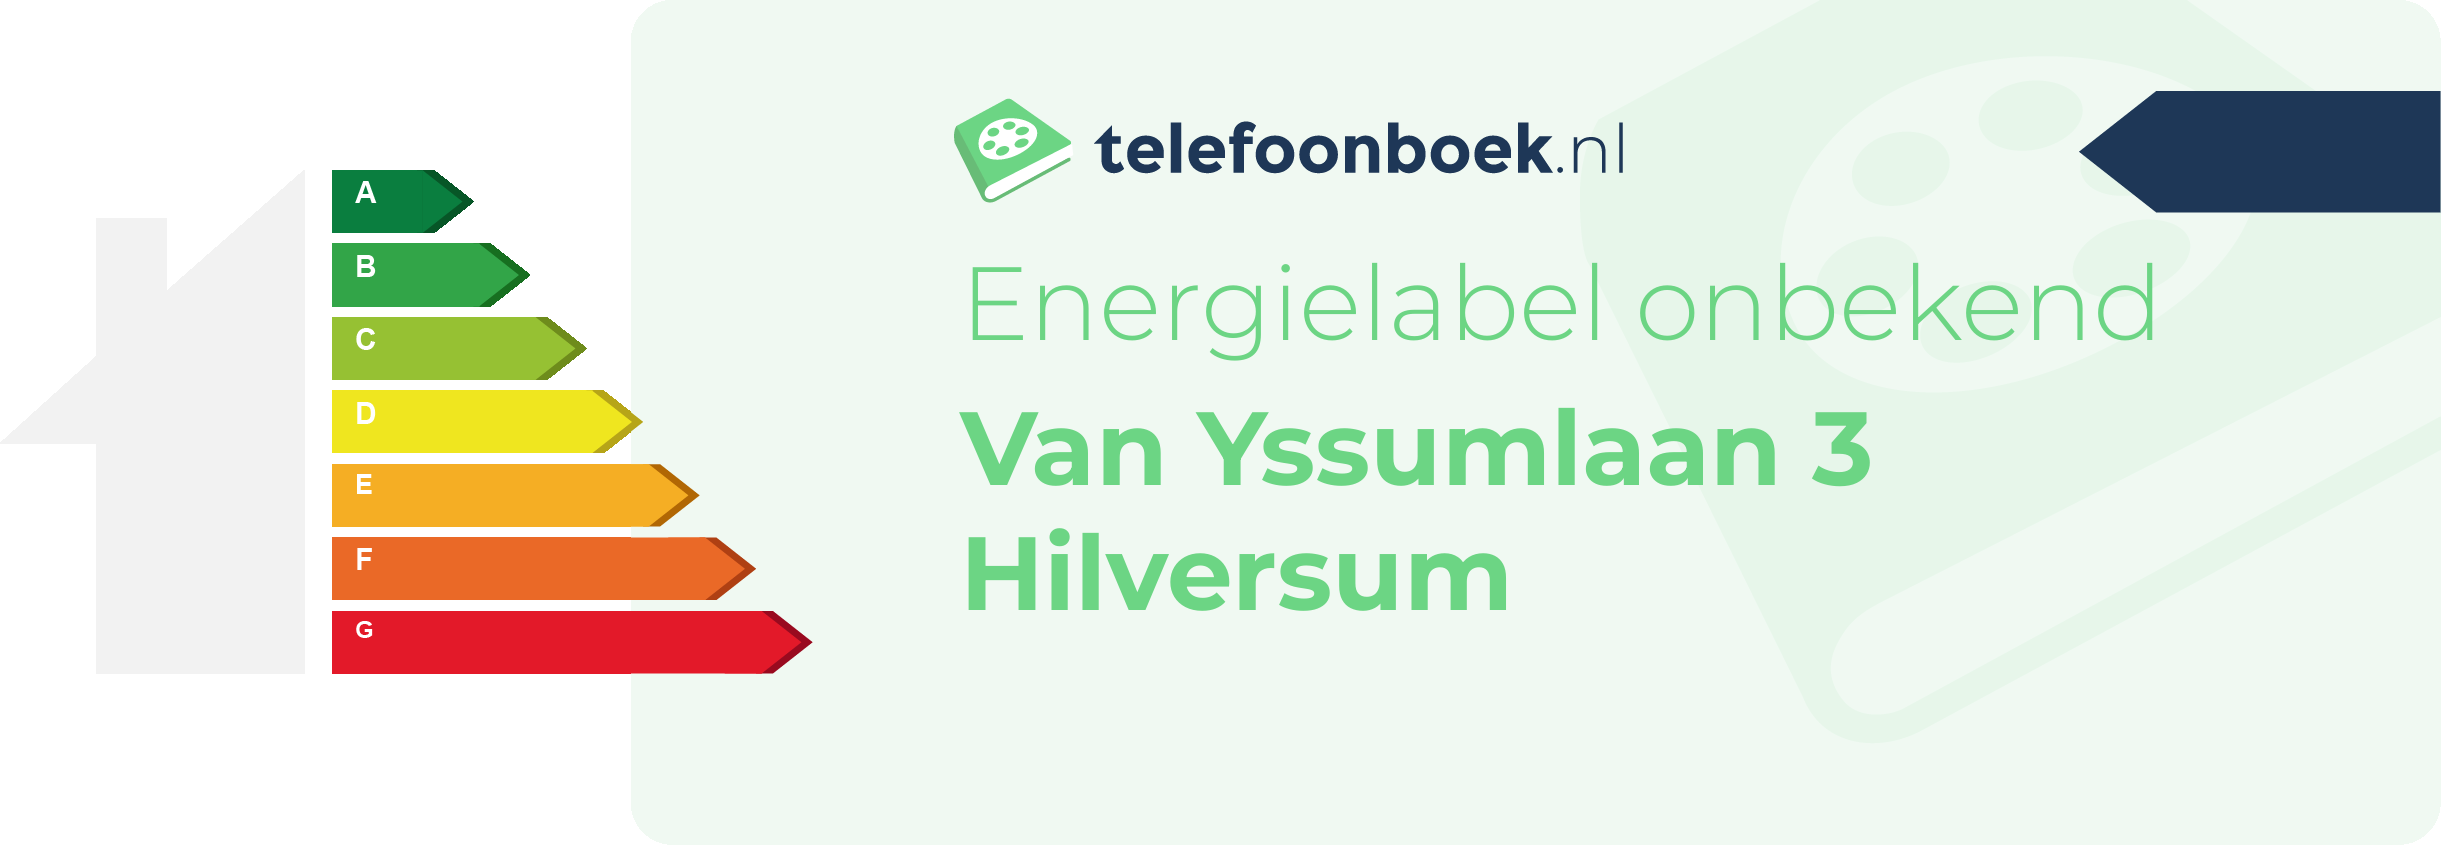 Energielabel Van Yssumlaan 3 Hilversum